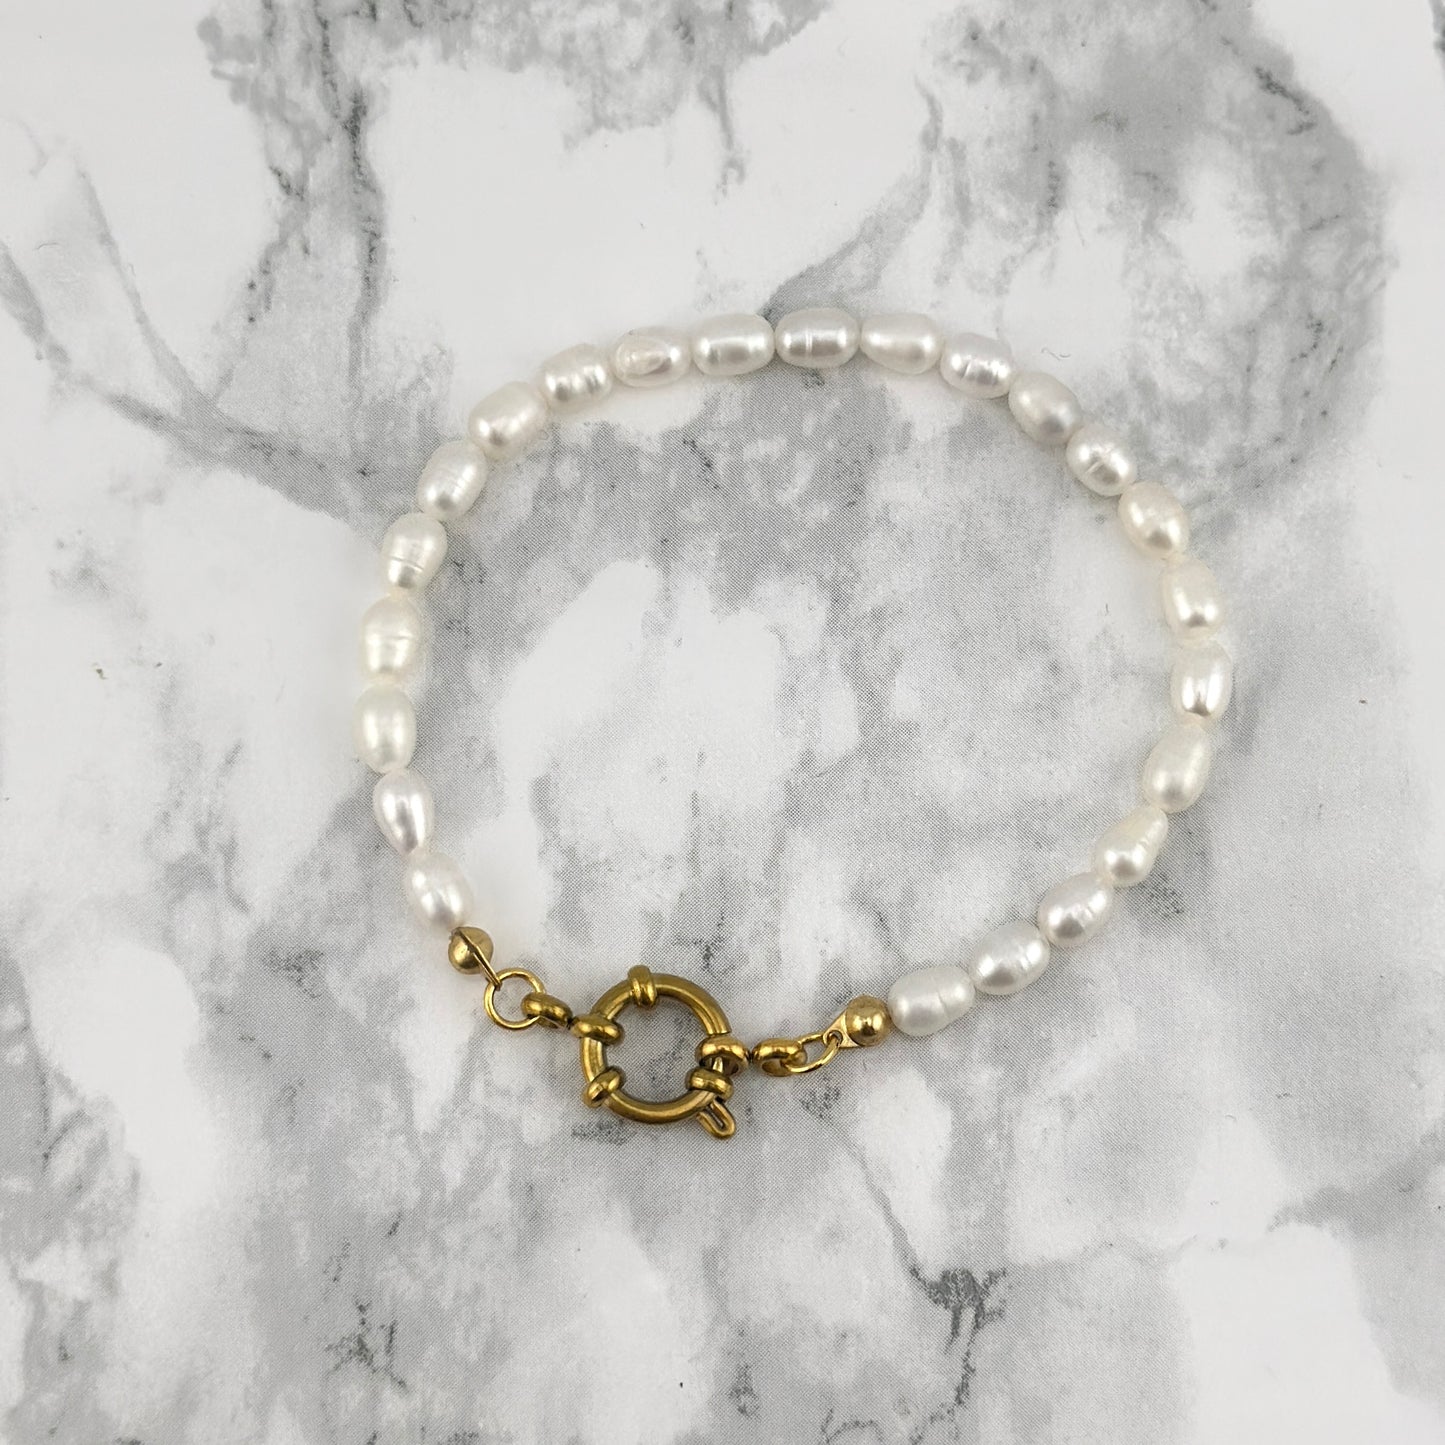 Pearl chunky clasp bracelet